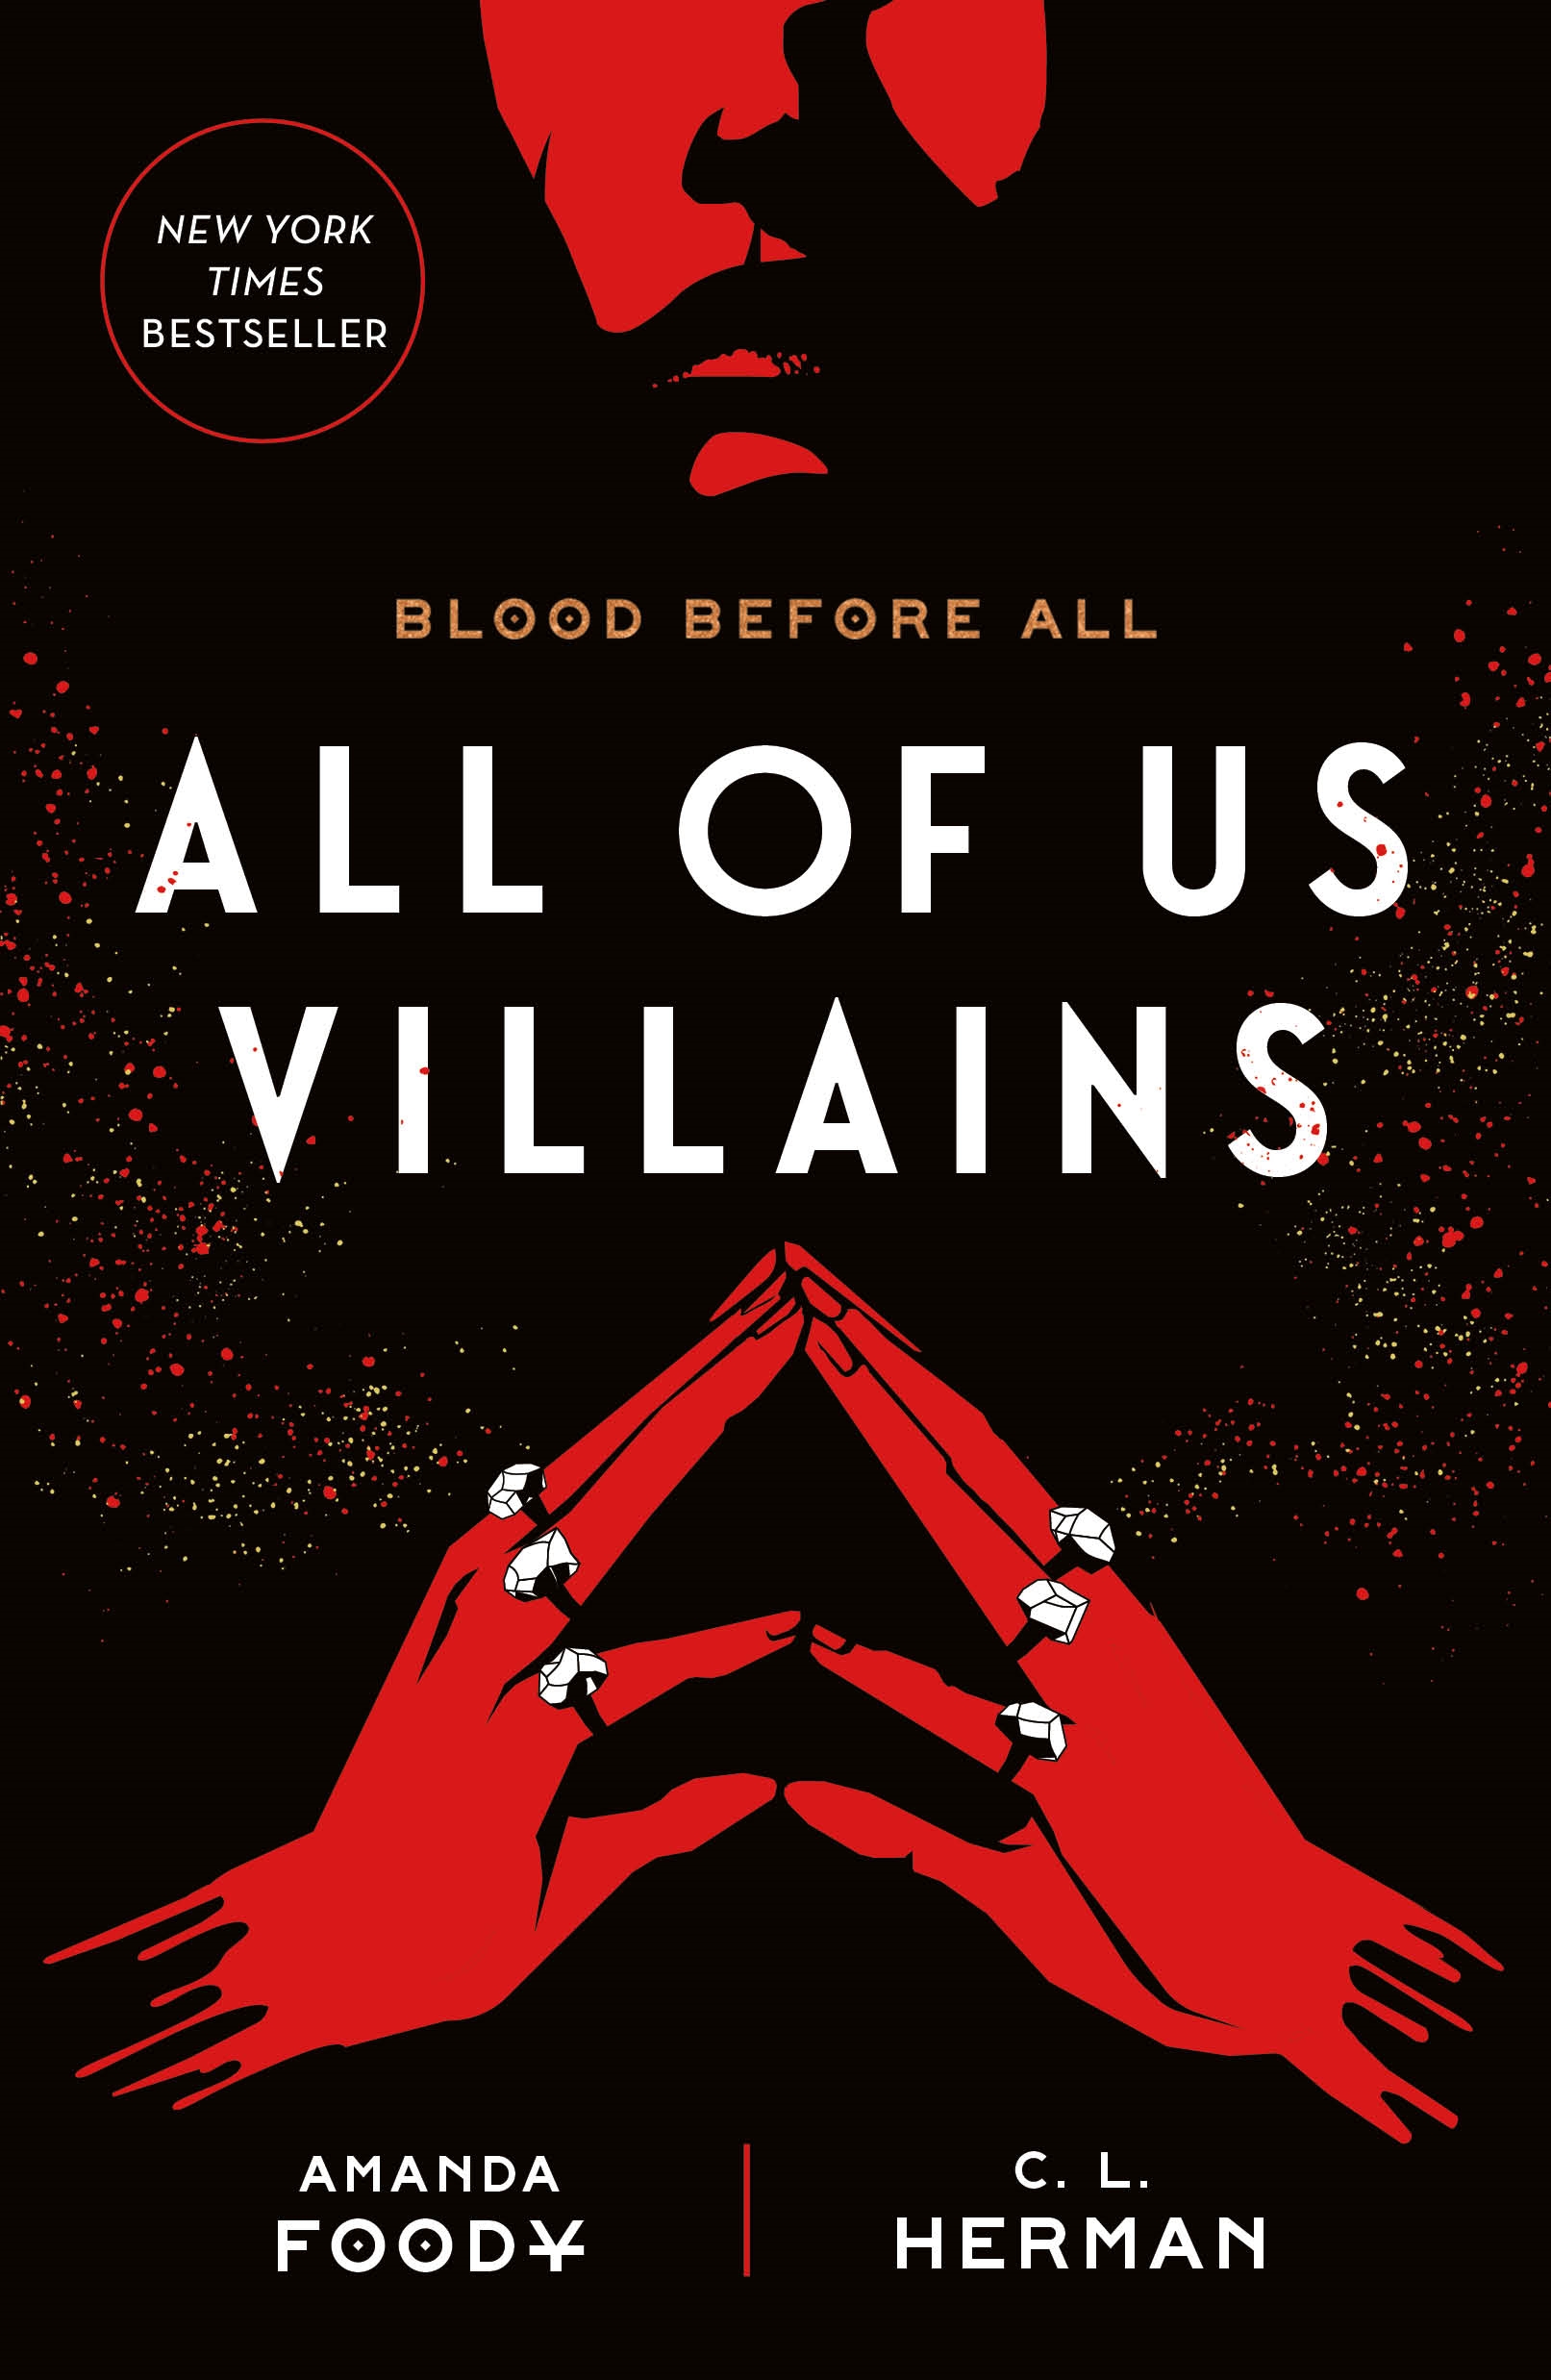 All of Us Villains by Amanda Foody, C. L. Herman